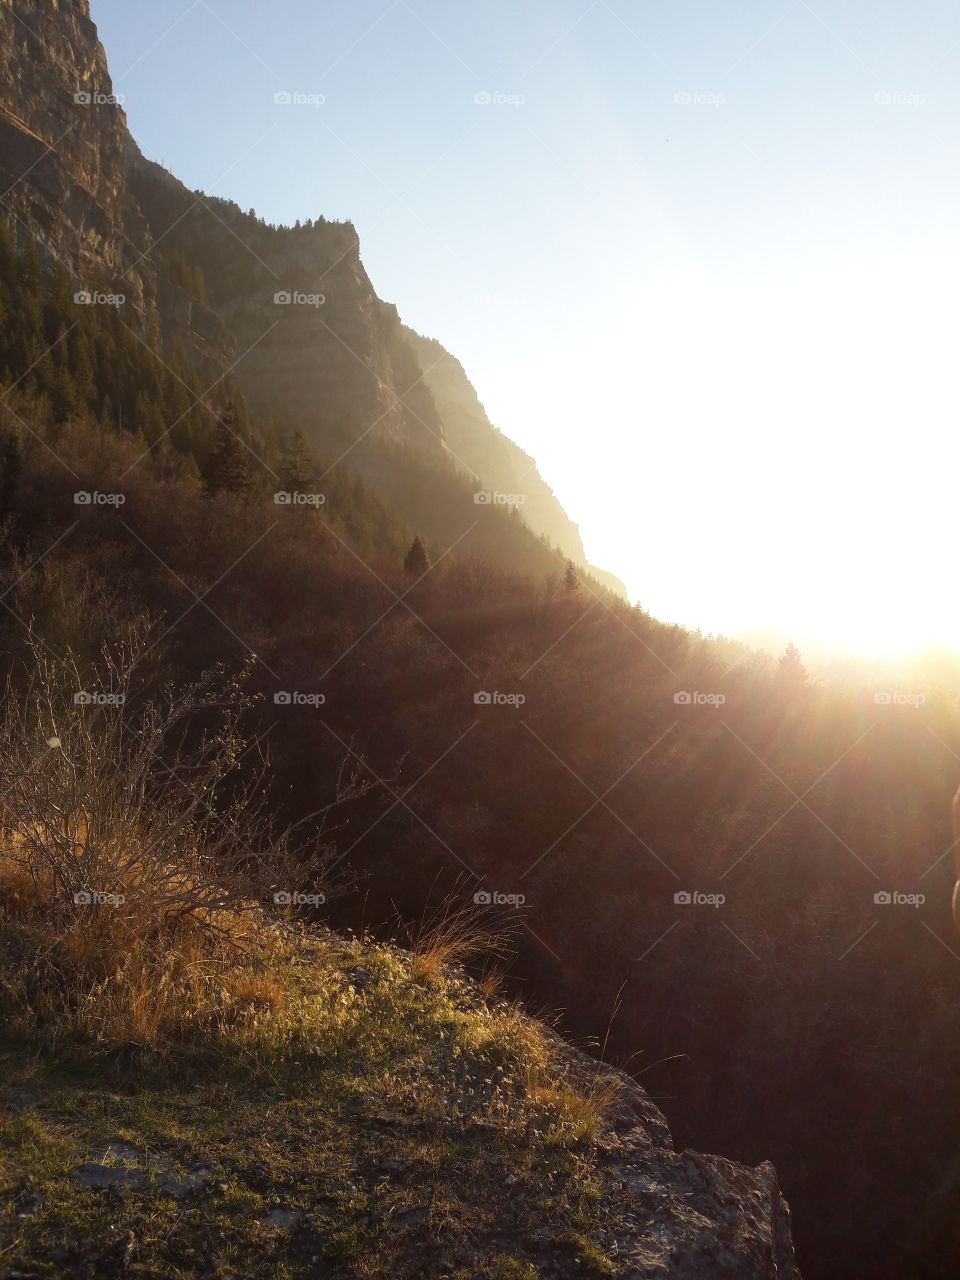 Sunbeams filtering through the mountain